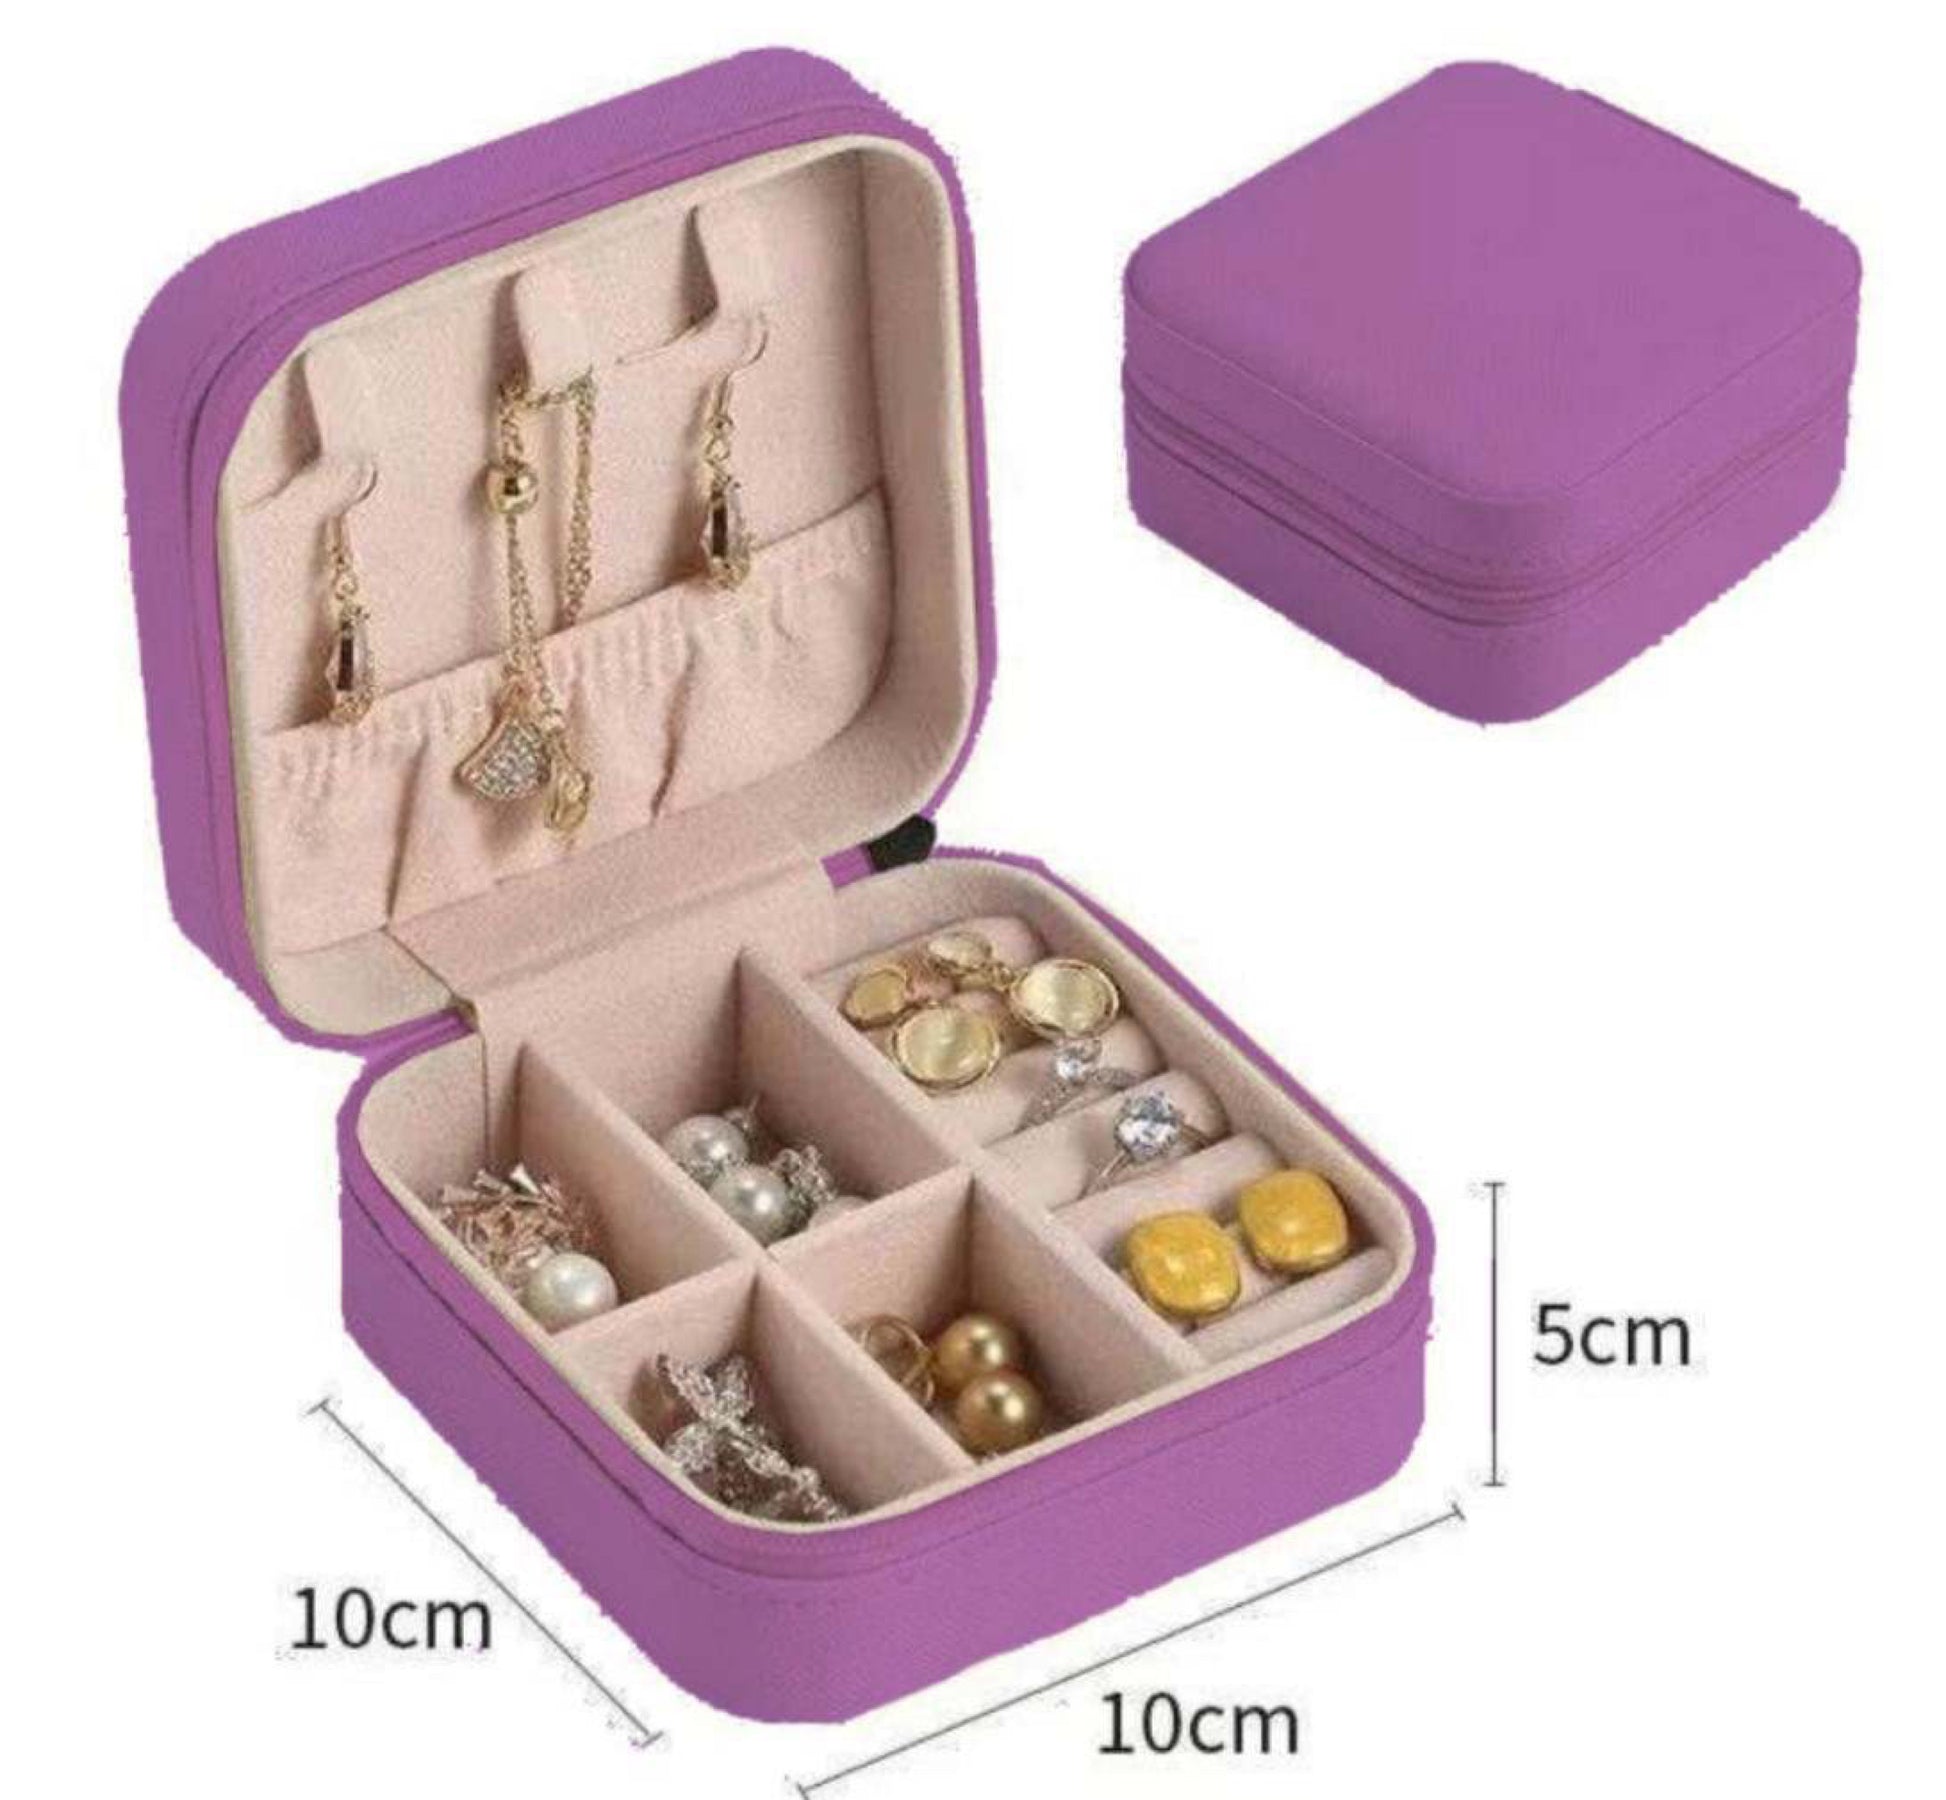 Dreamlux signature personalized jewelry box 💎 𝙒𝙝𝙖𝙩'𝙨 𝙞𝙣𝙨𝙞𝙙𝙚  𝙩𝙝𝙚 𝙗𝙤𝙭 1 x L'Occitane perfume soap 50g 2 x Customised chocolate bar  15g 1…